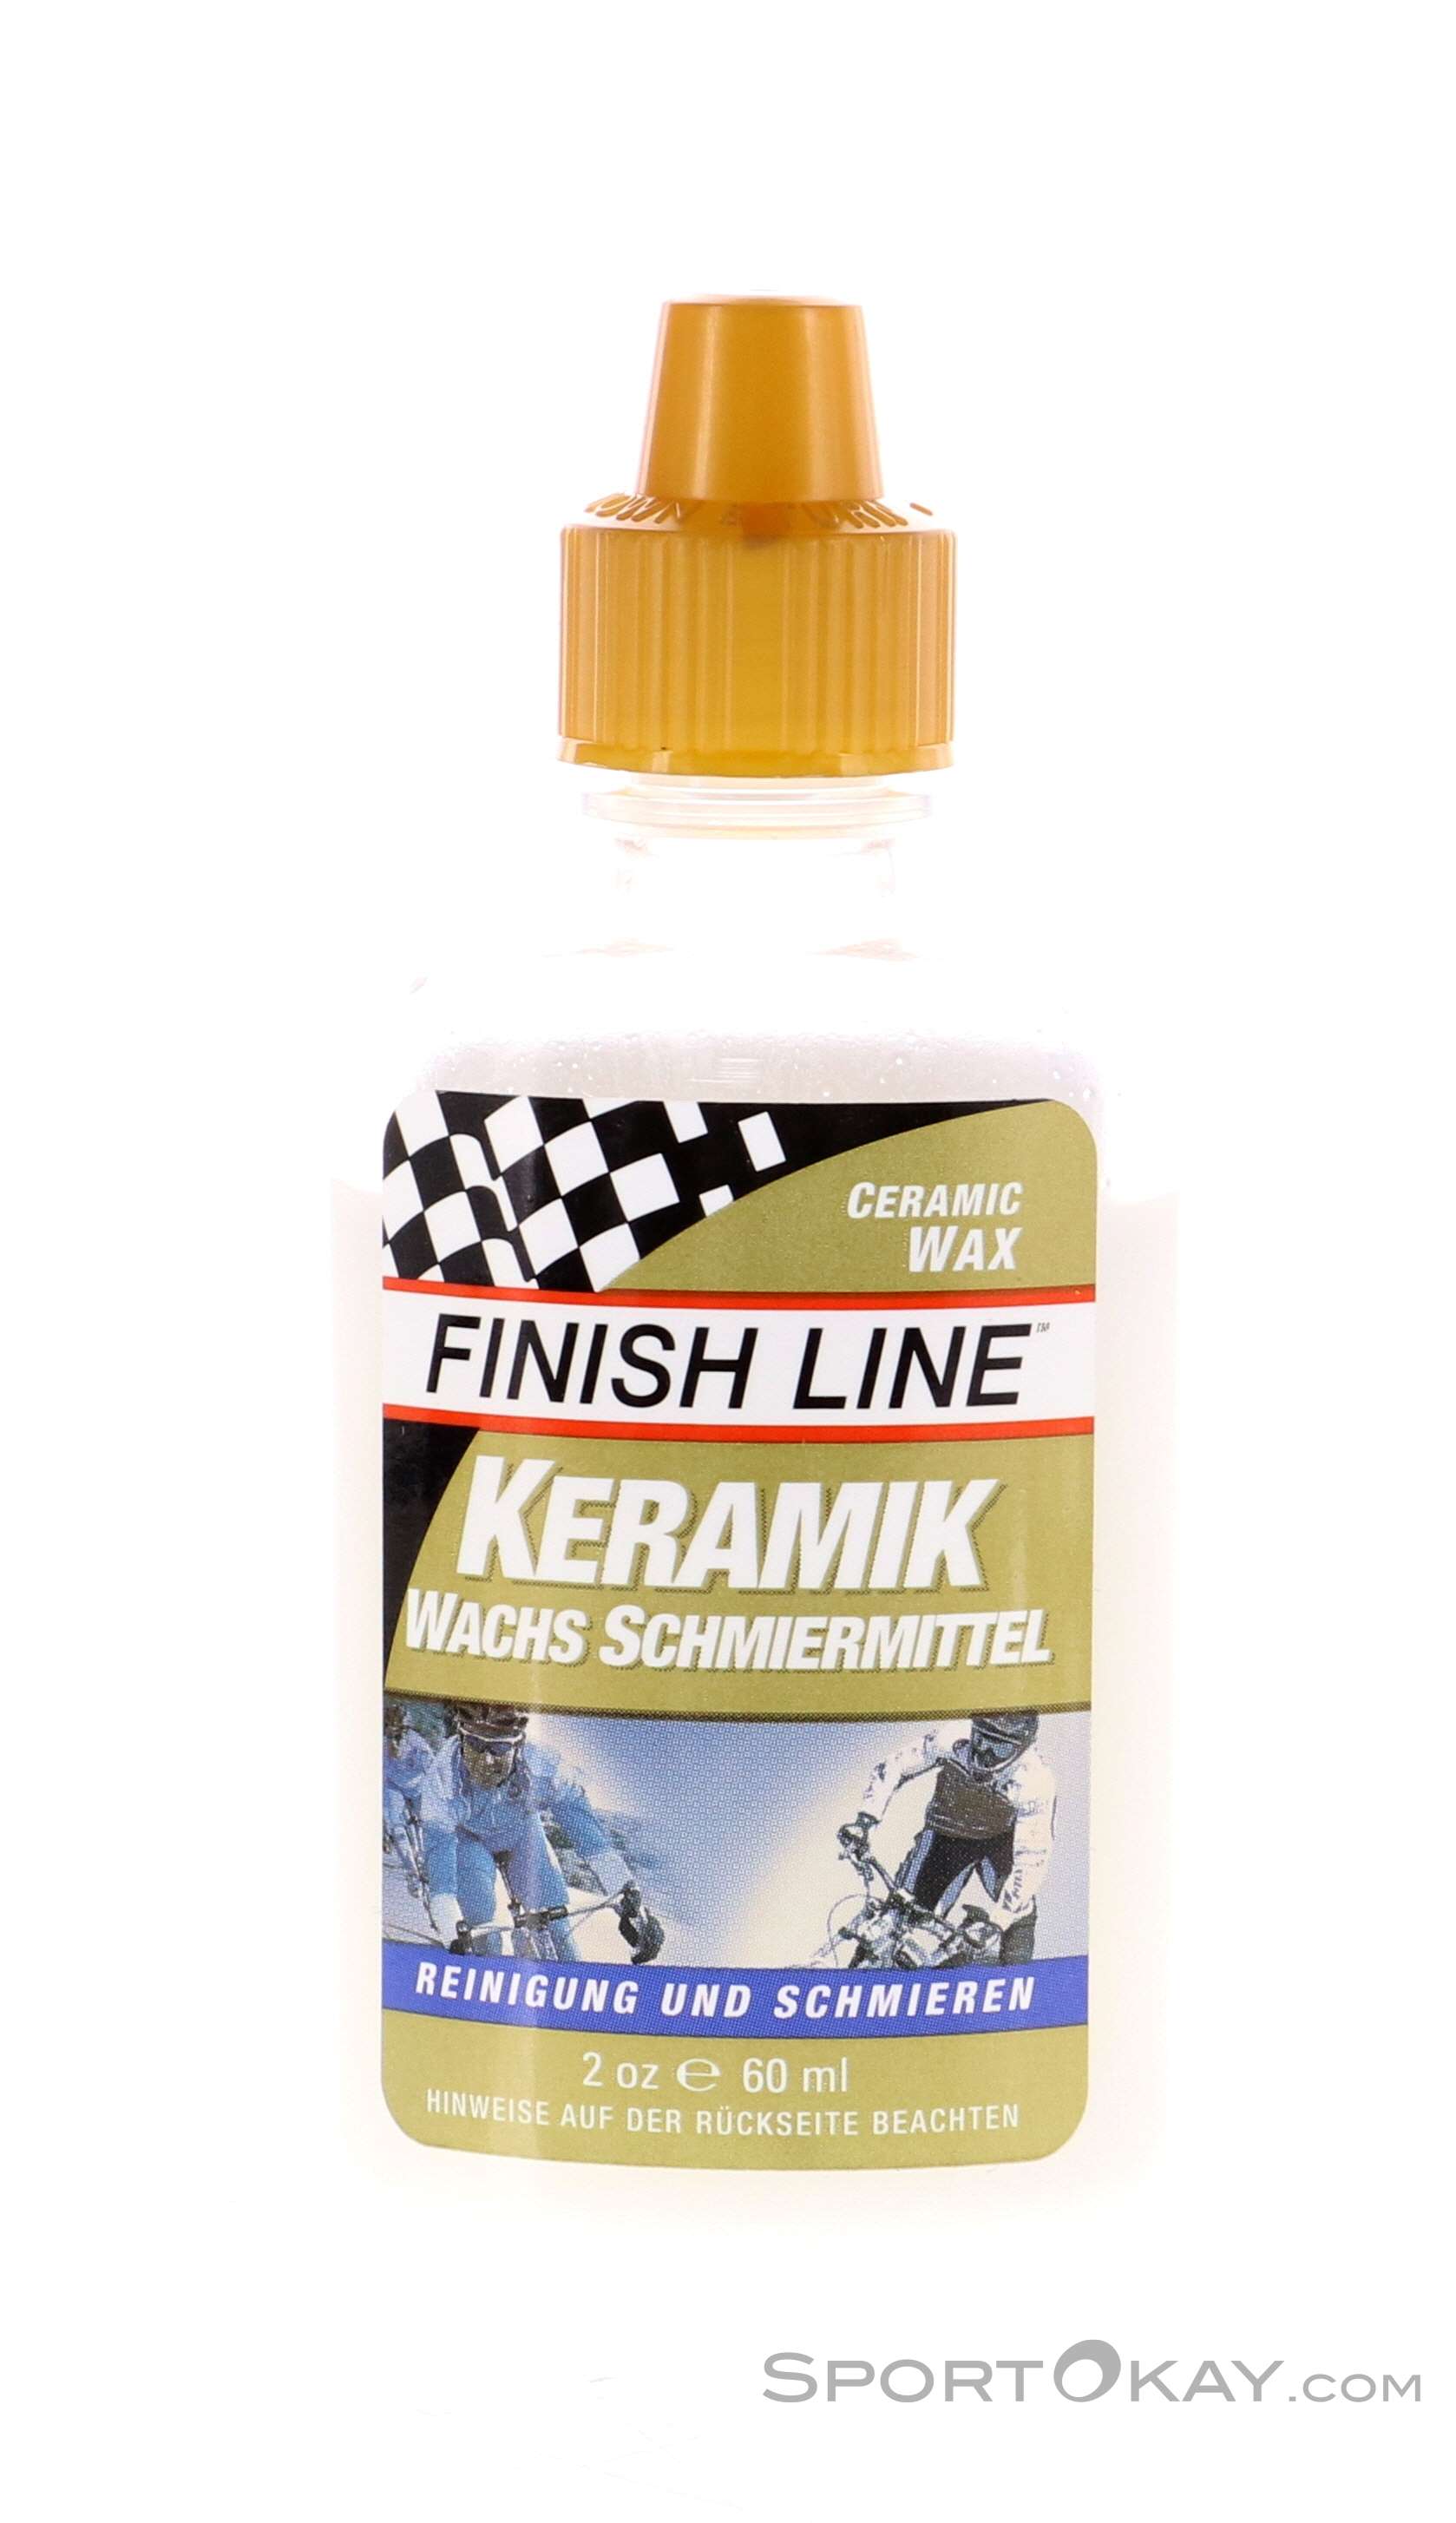 Finish Line Ceramic Wax Lubricant - 4 fl oz bottle